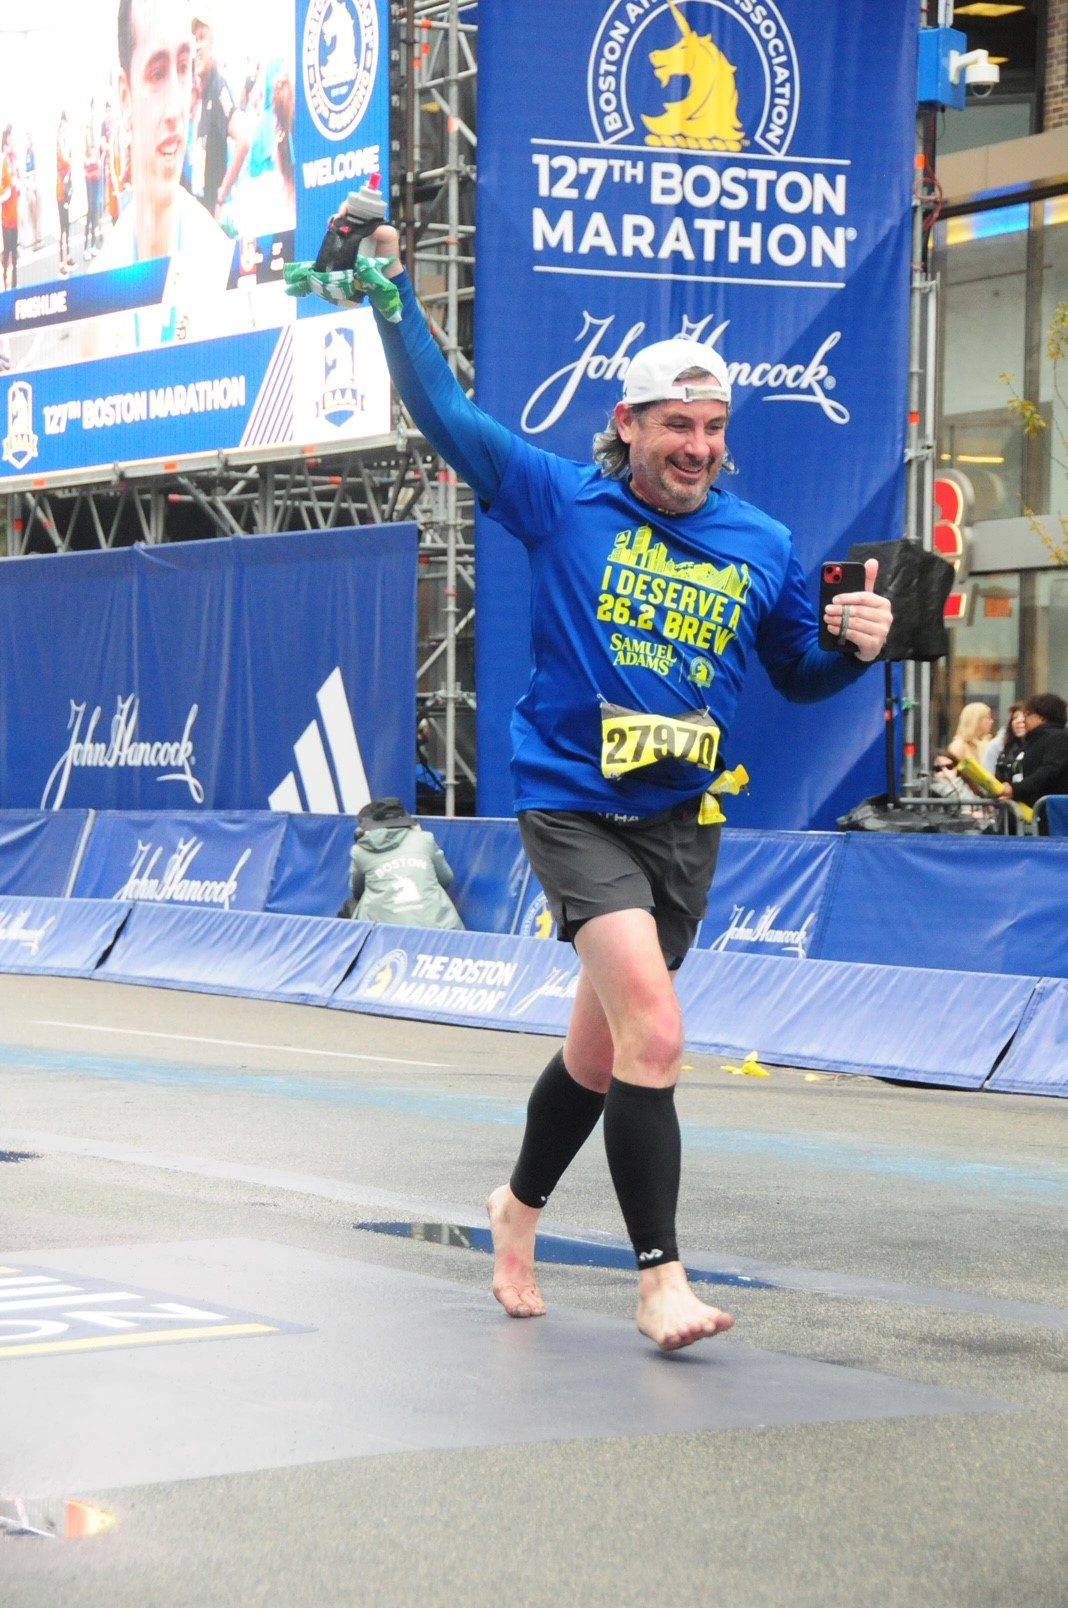 Featured image for “Milford man runs Boston Marathon”